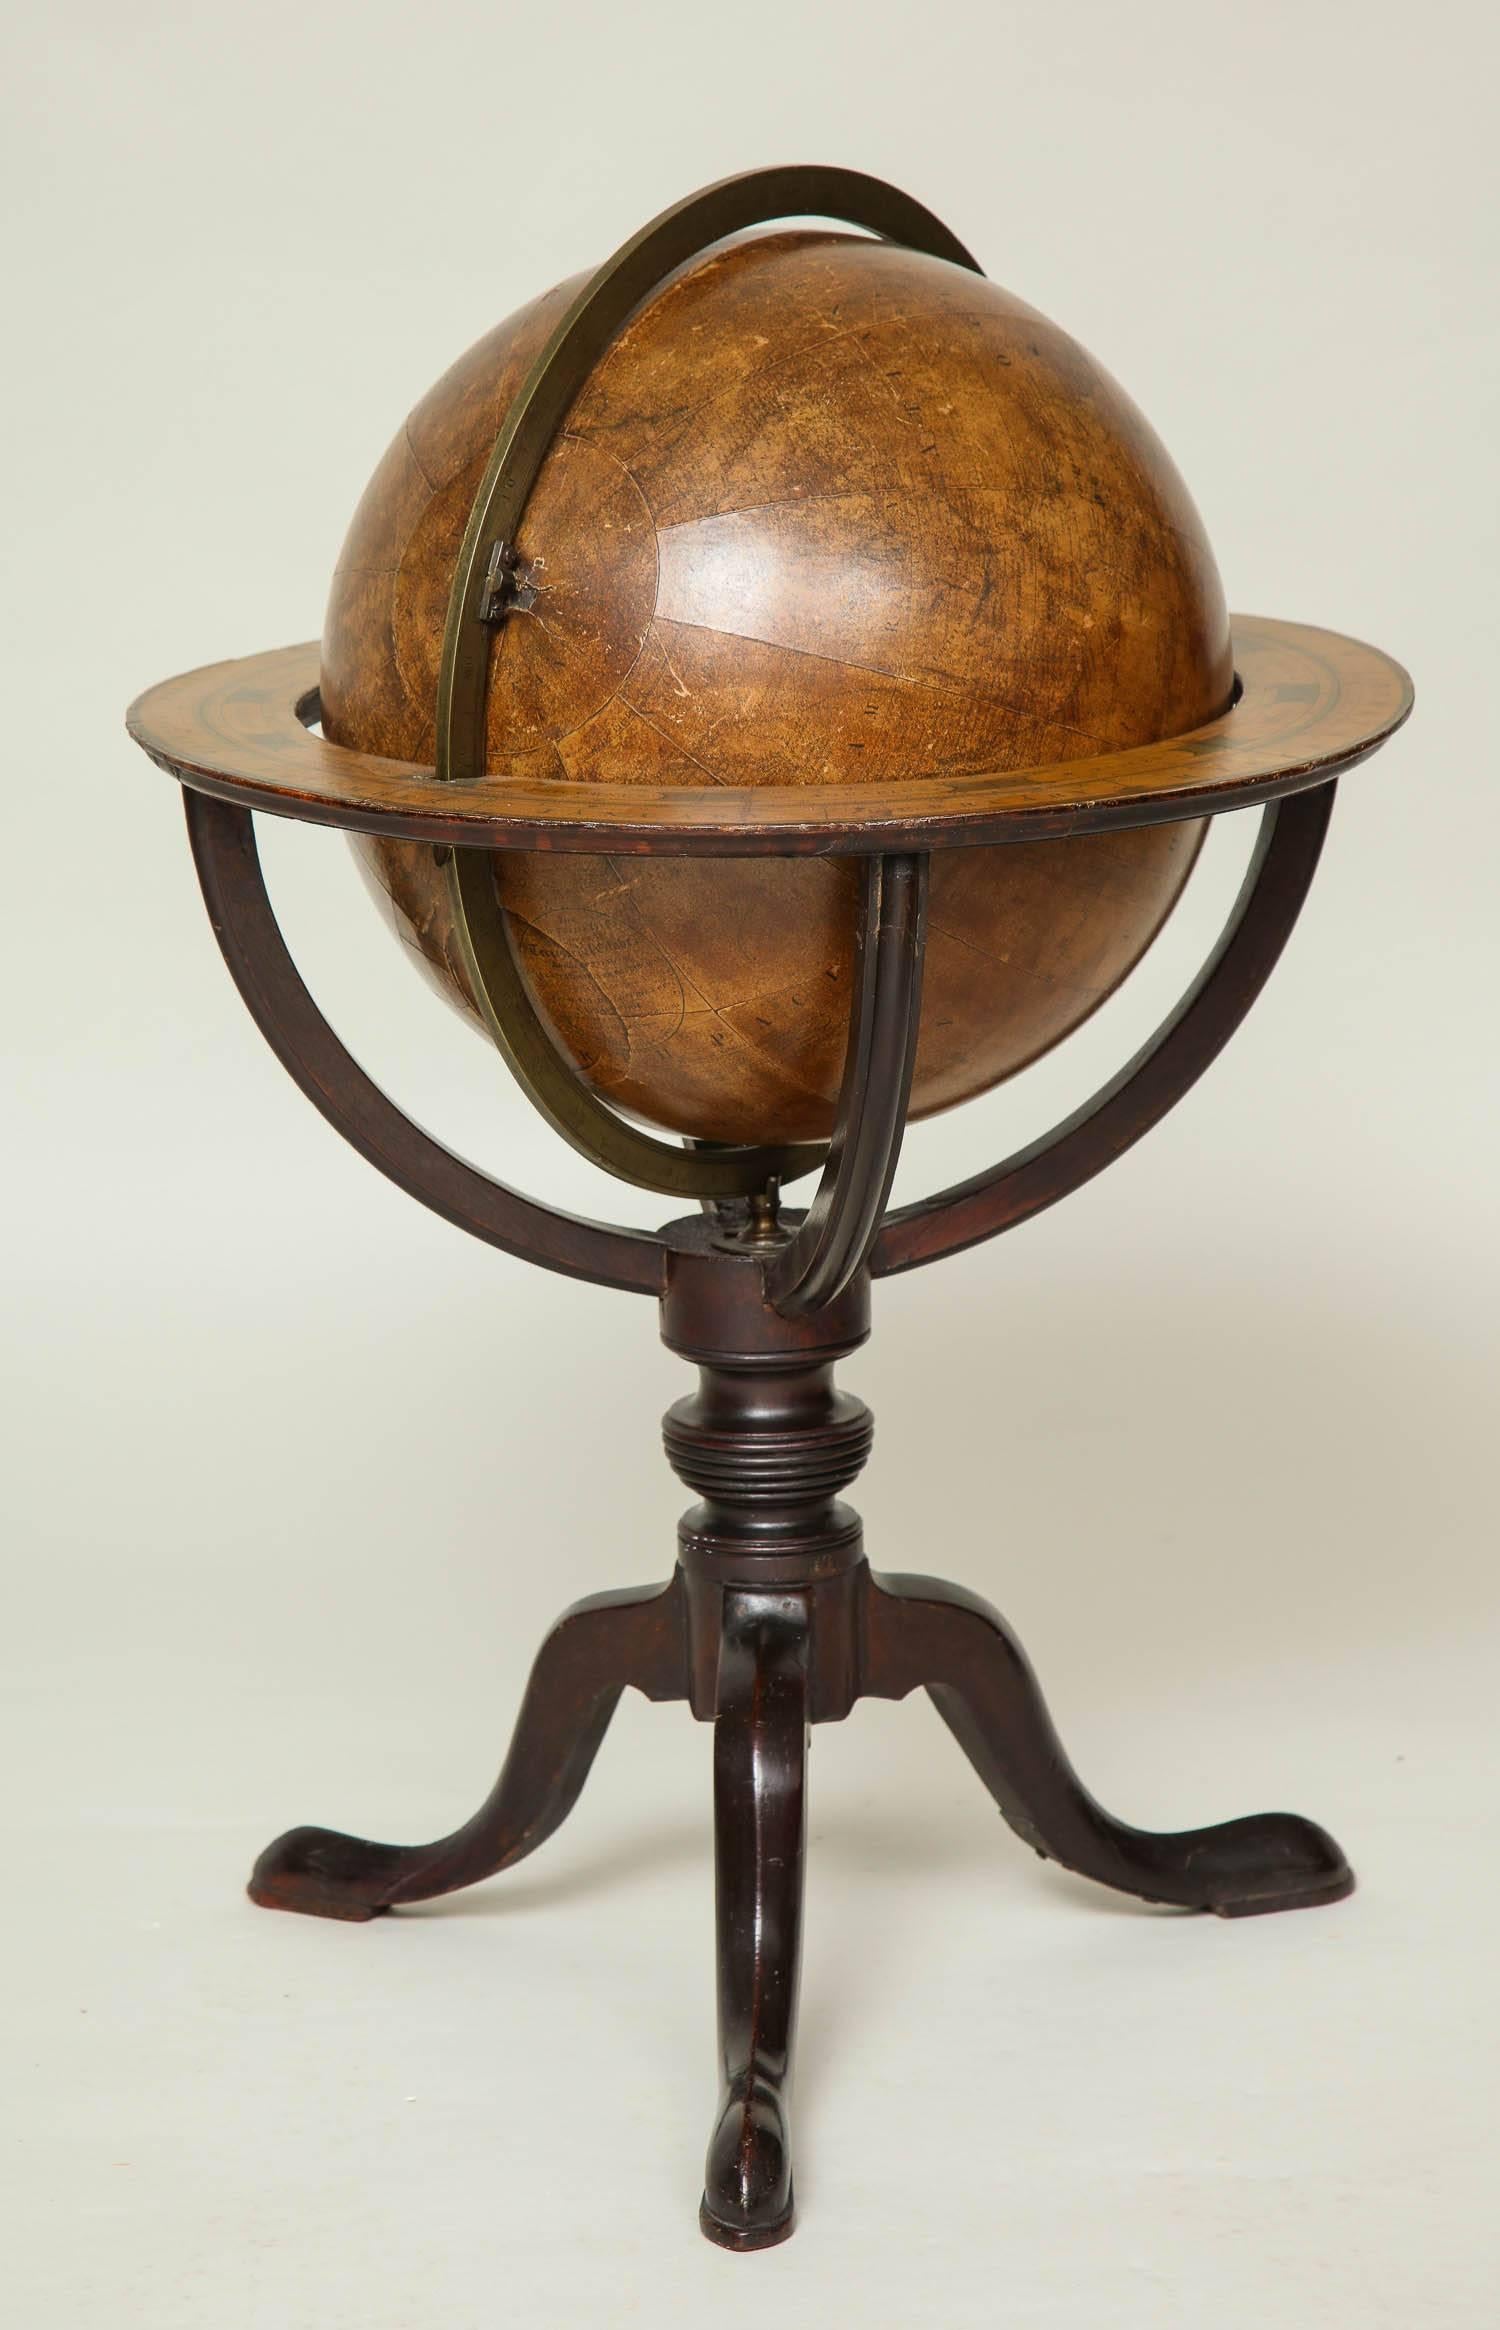 Assembled Pair of Georgian Celestial and Terrestrial Globes 1